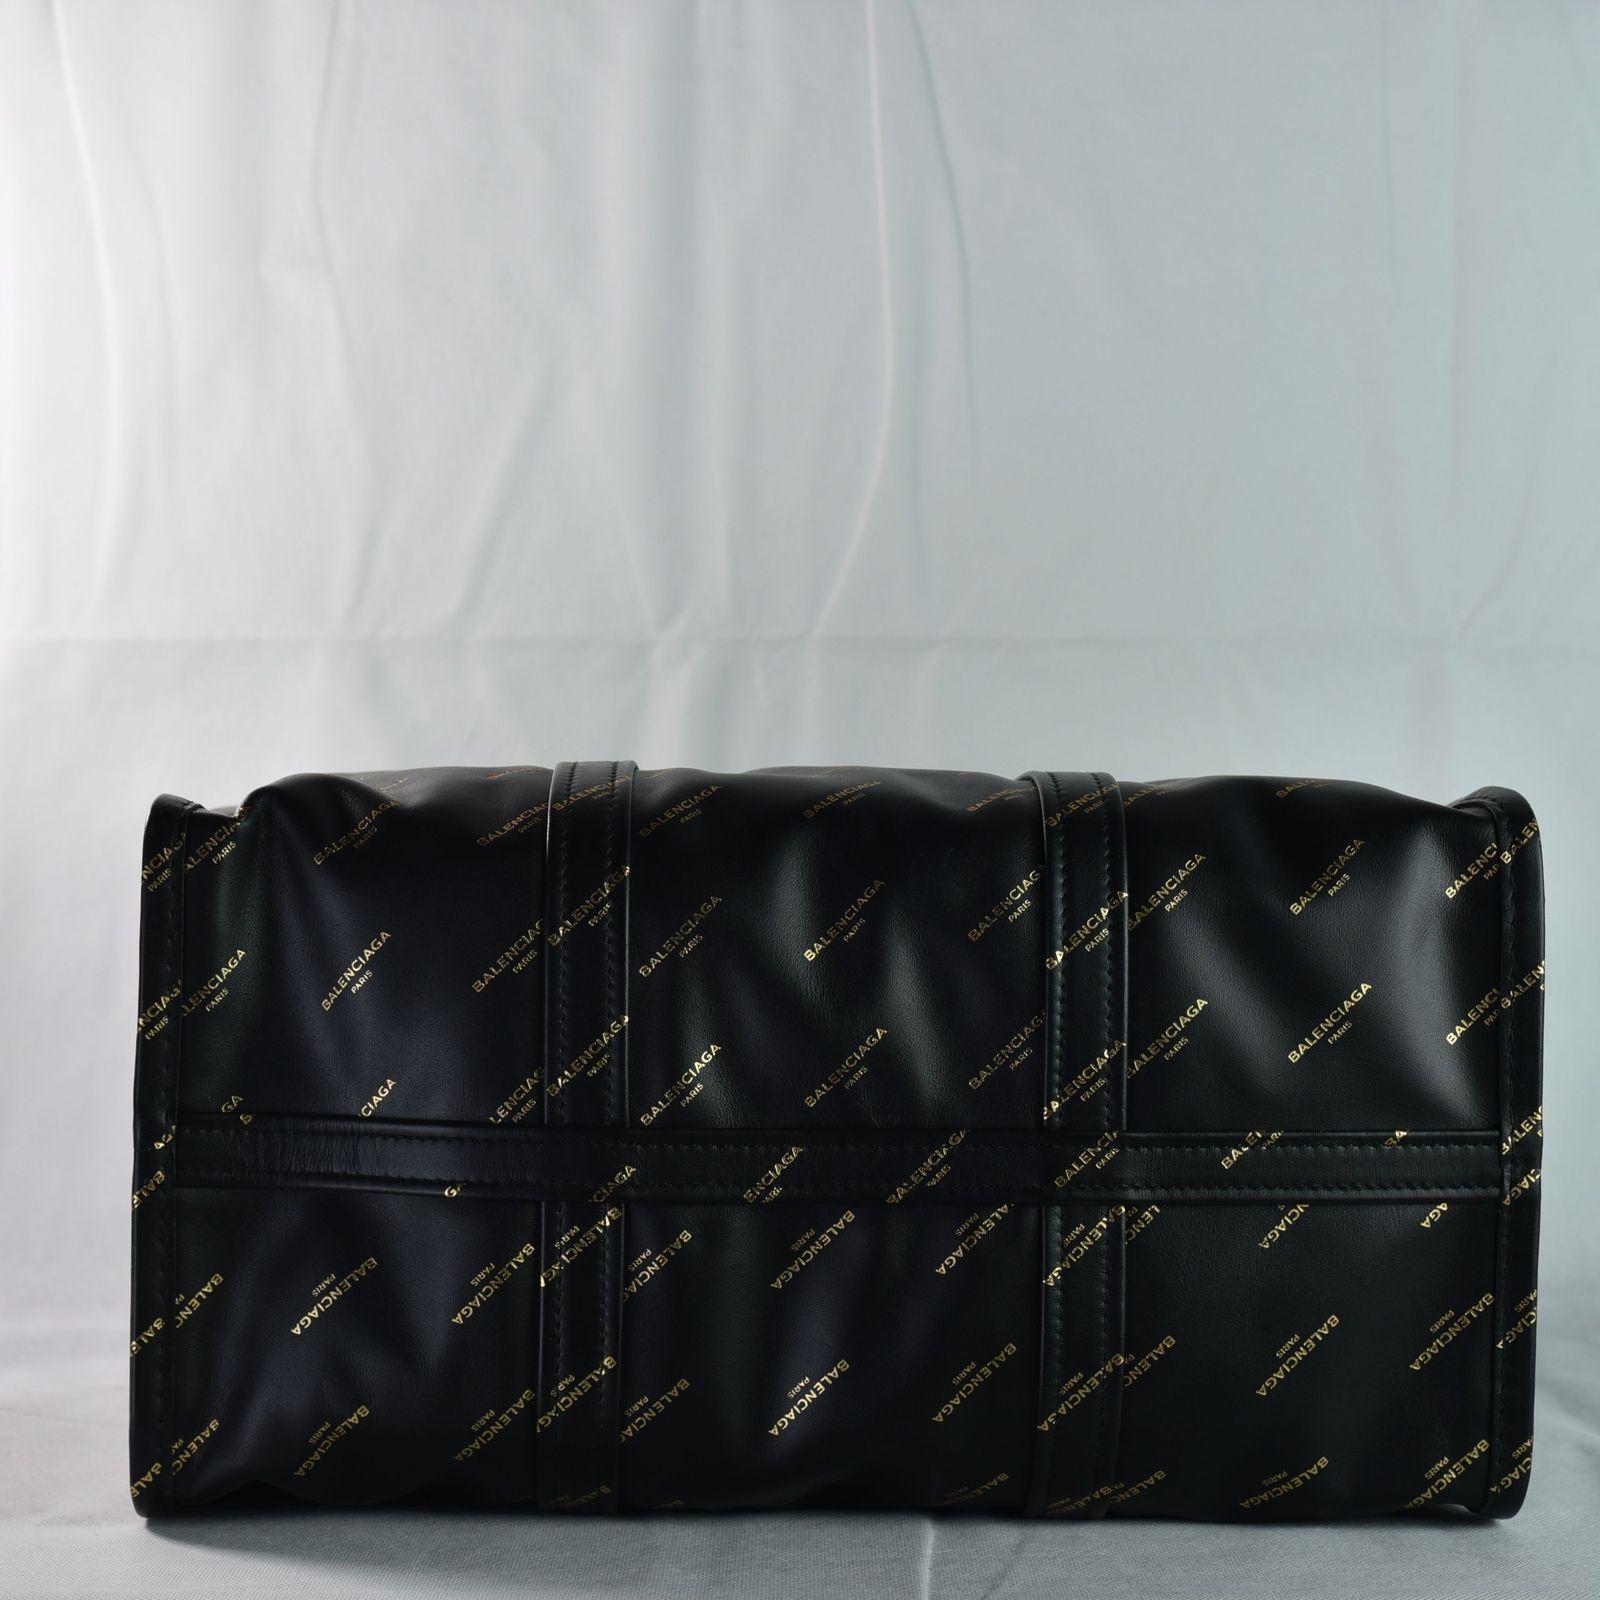 Balenciaga NEW Bazar Shopper M Black Leather Tote Bag Handbag 7